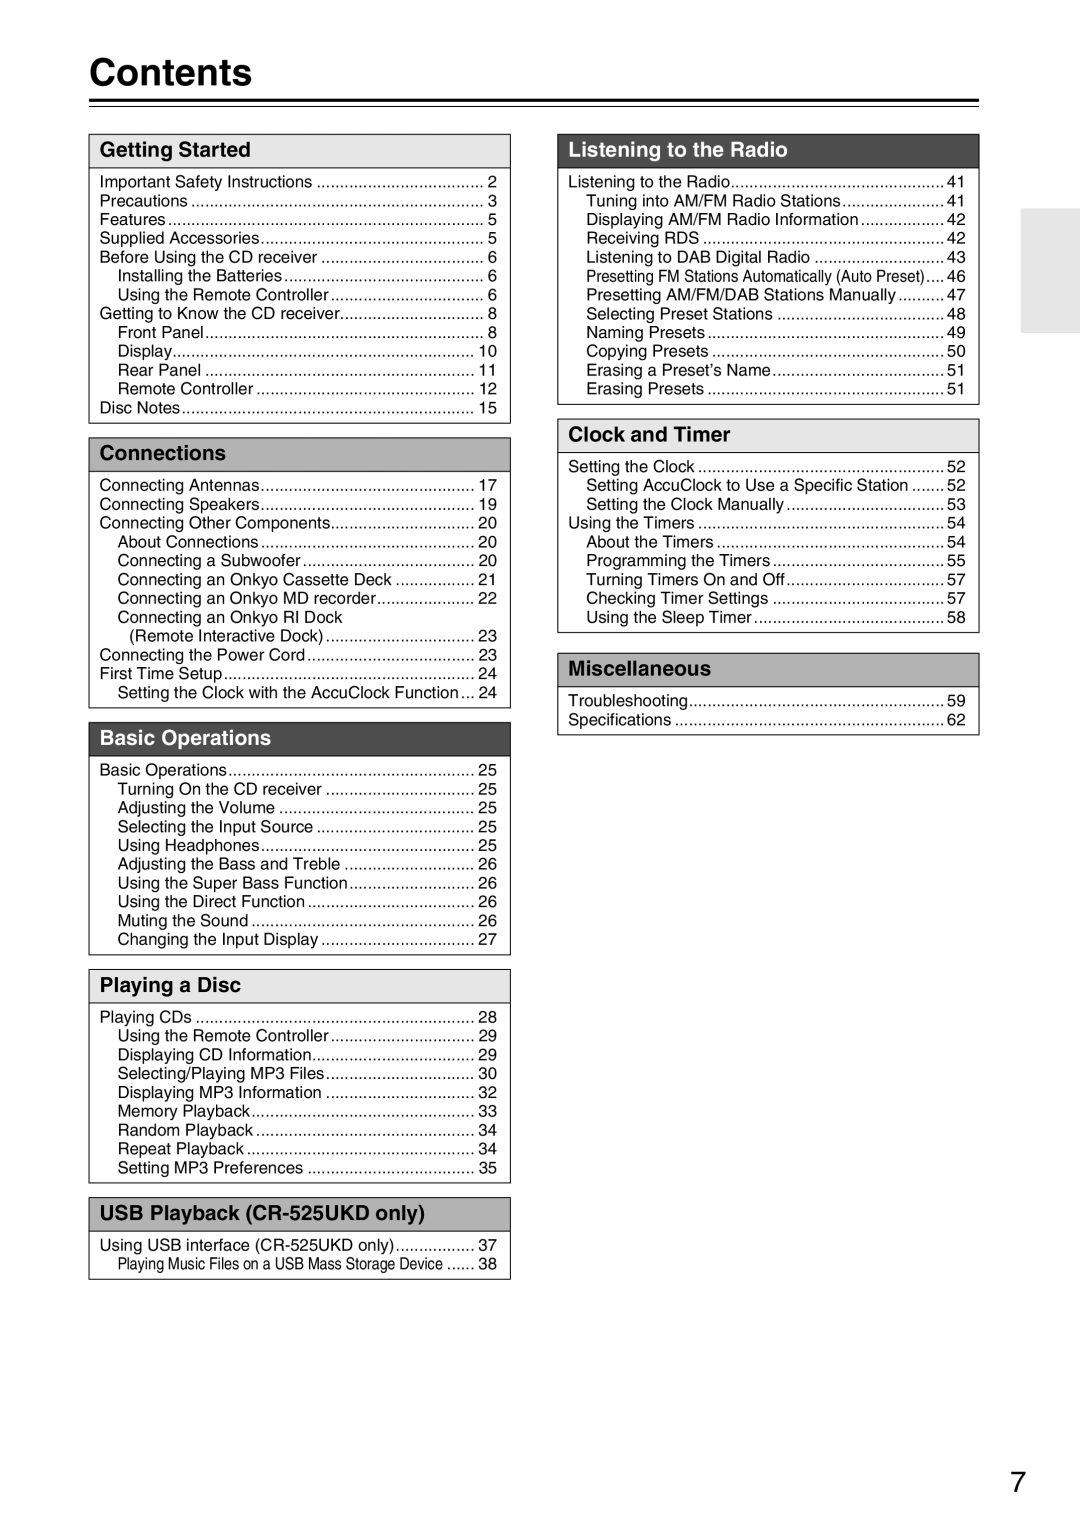 Onkyo CR-425UKD, CR-325UKD, CR-525UKD instruction manual Contents 